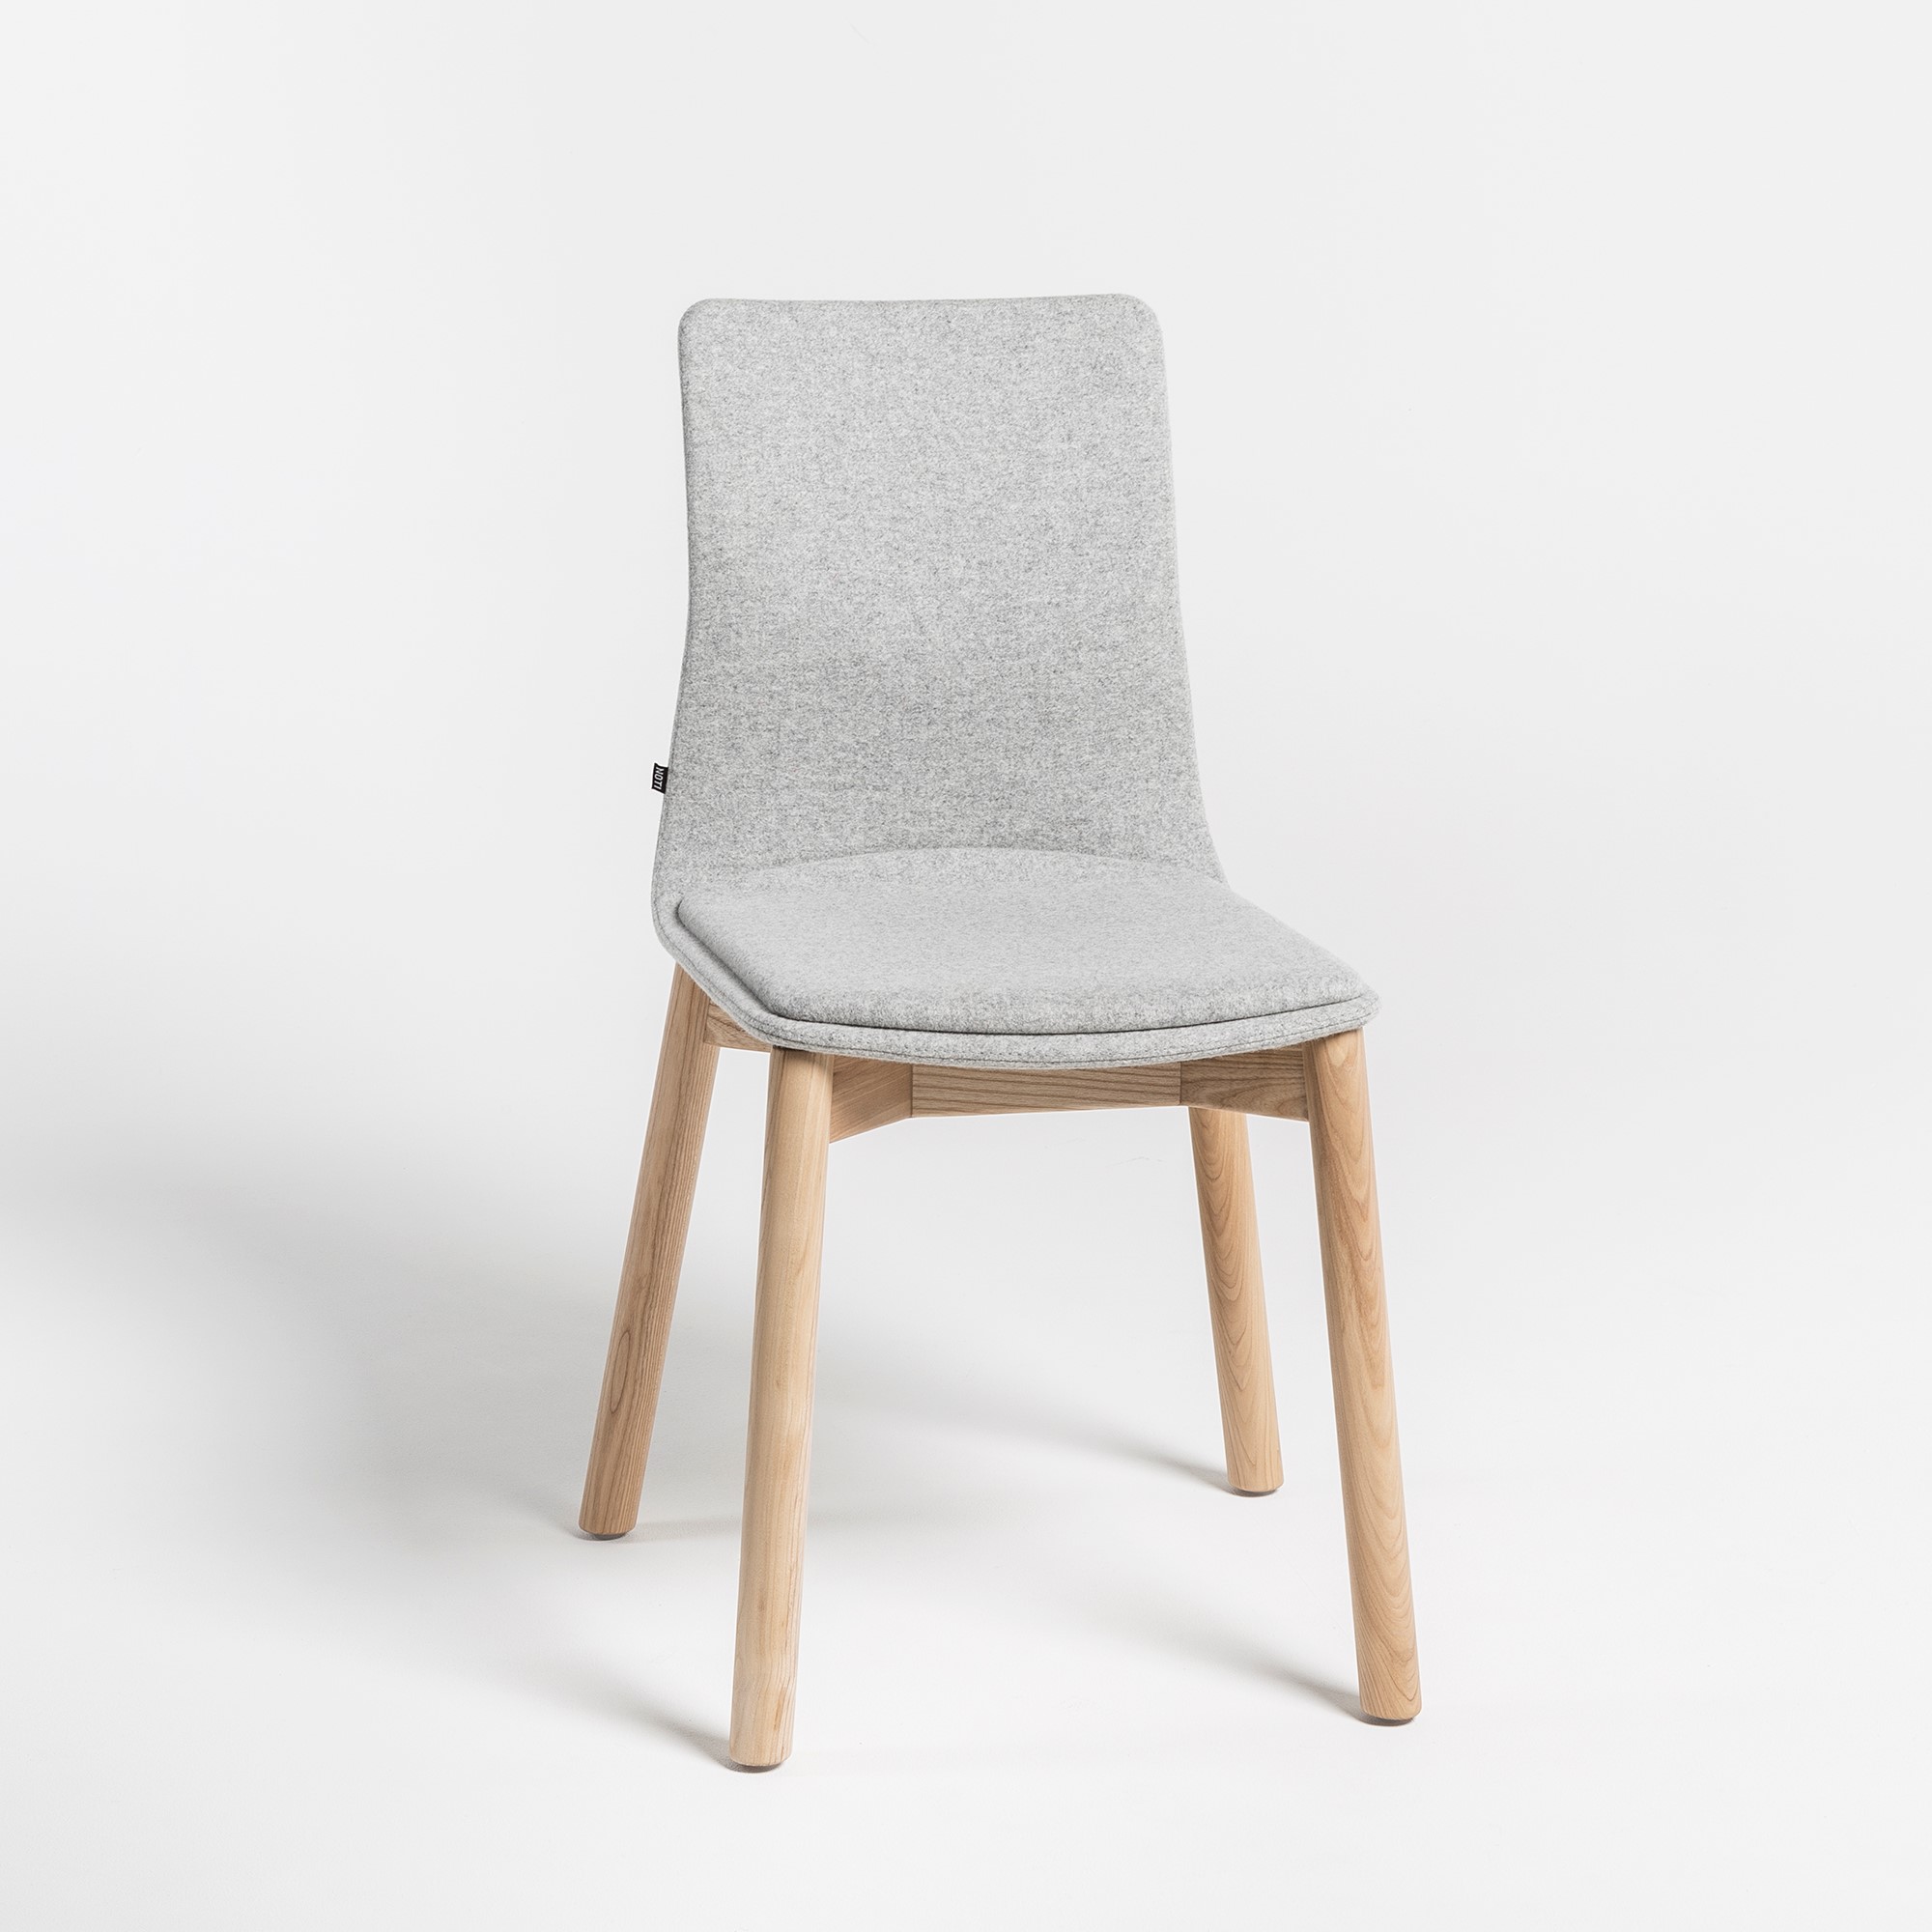 LINAR_packshot_chair_upholstered_pad_wooden_legs_0